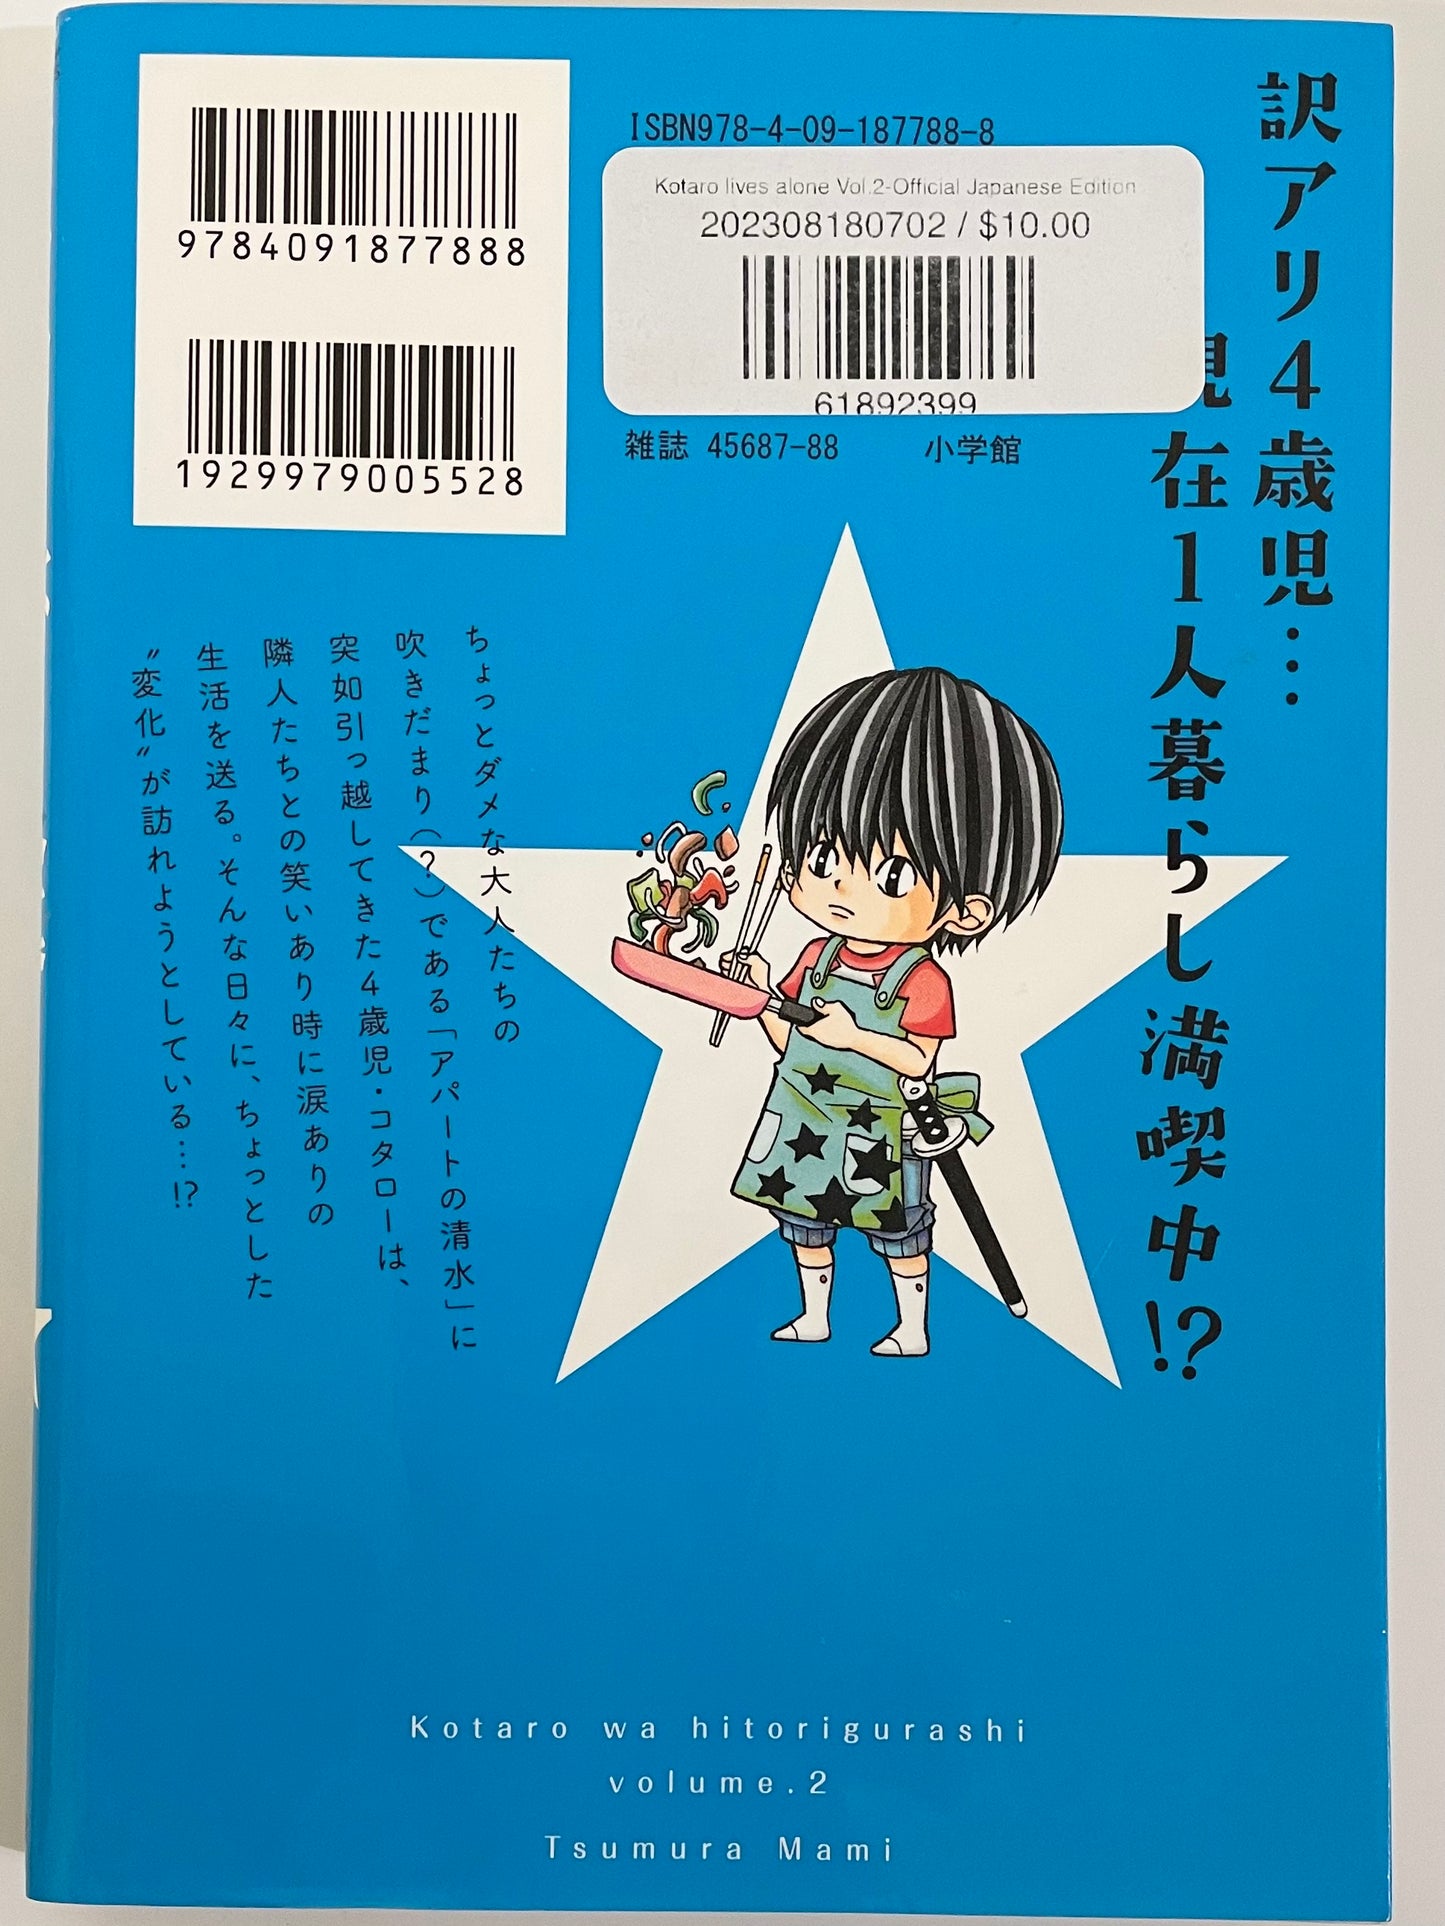 Kotaro lives alone Vol.2-Official Japanese Edition